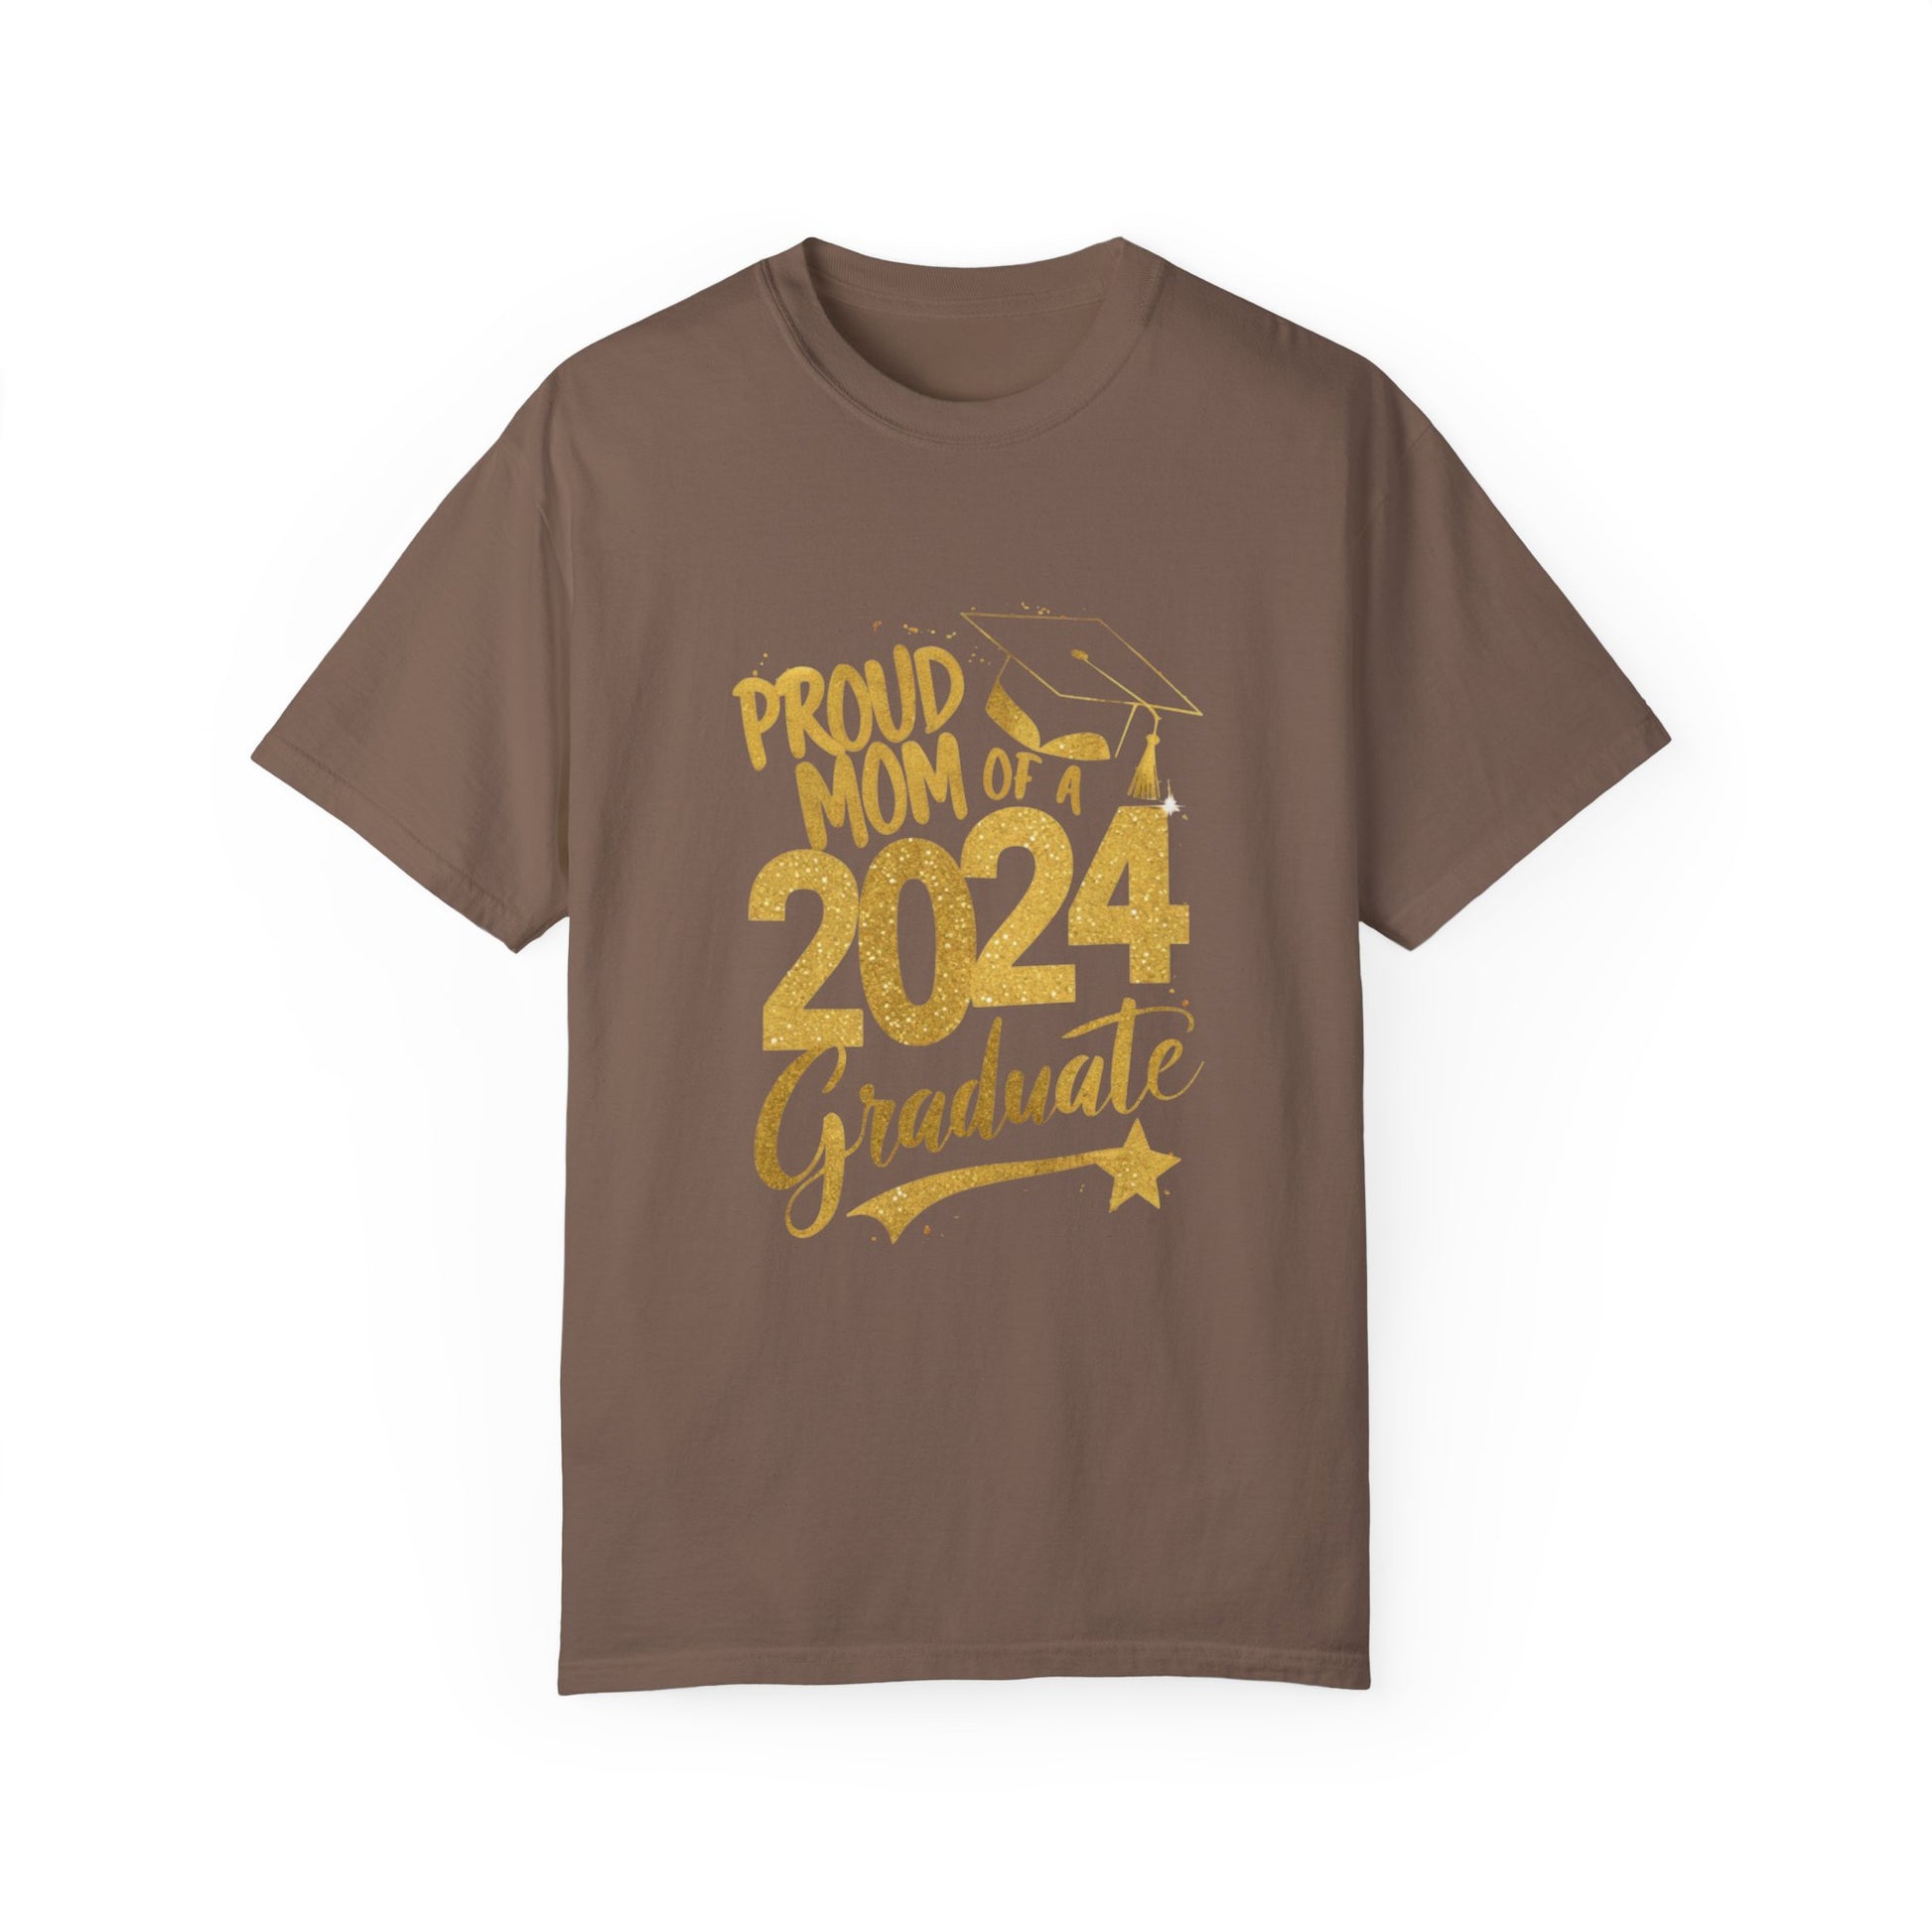 Proud of Mom 2024 Graduate Unisex Garment-dyed T-shirt Cotton Funny Humorous Graphic Soft Premium Unisex Men Women Espresso T-shirt Birthday Gift-15